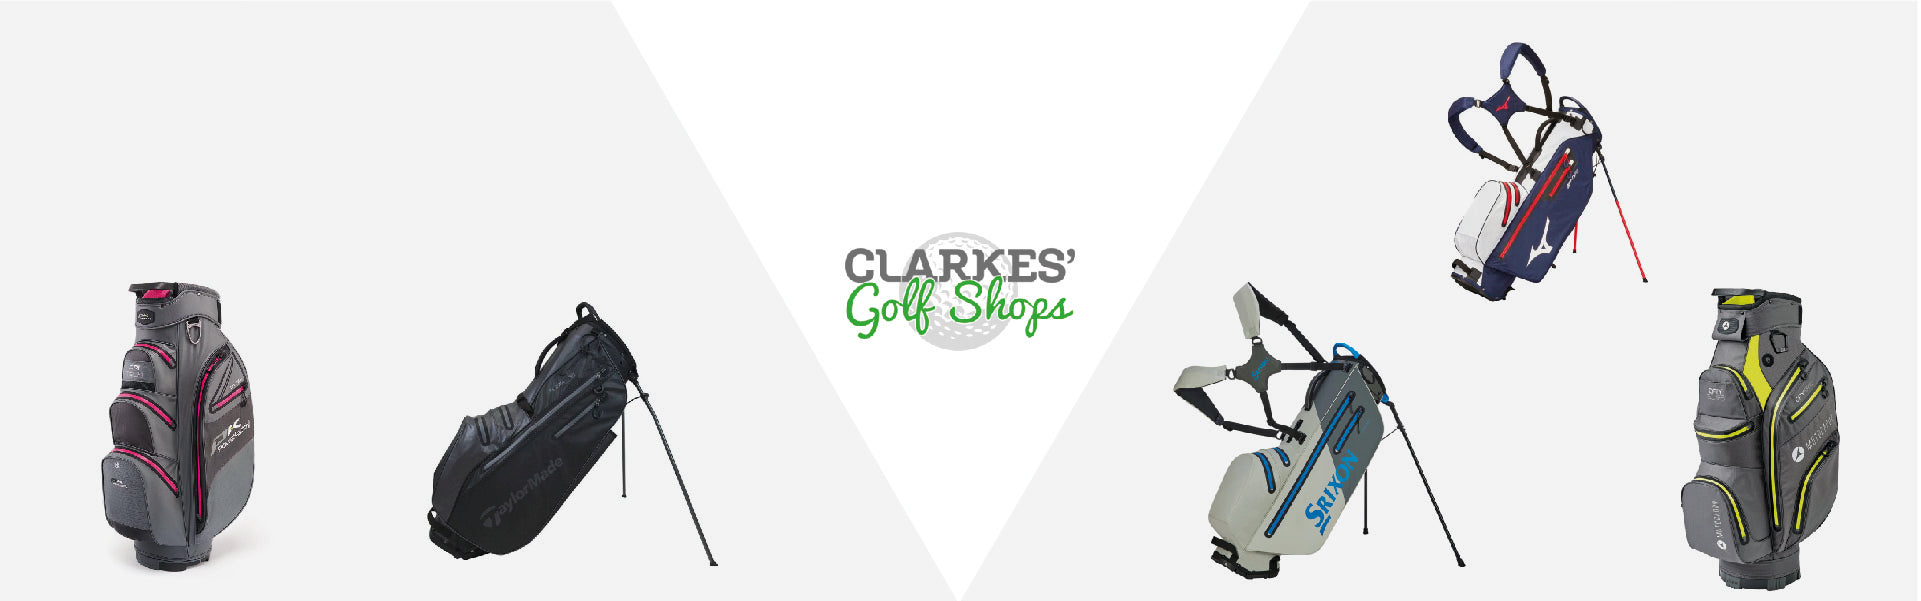 Best Waterproof Golf Bags - Clarkes Golf